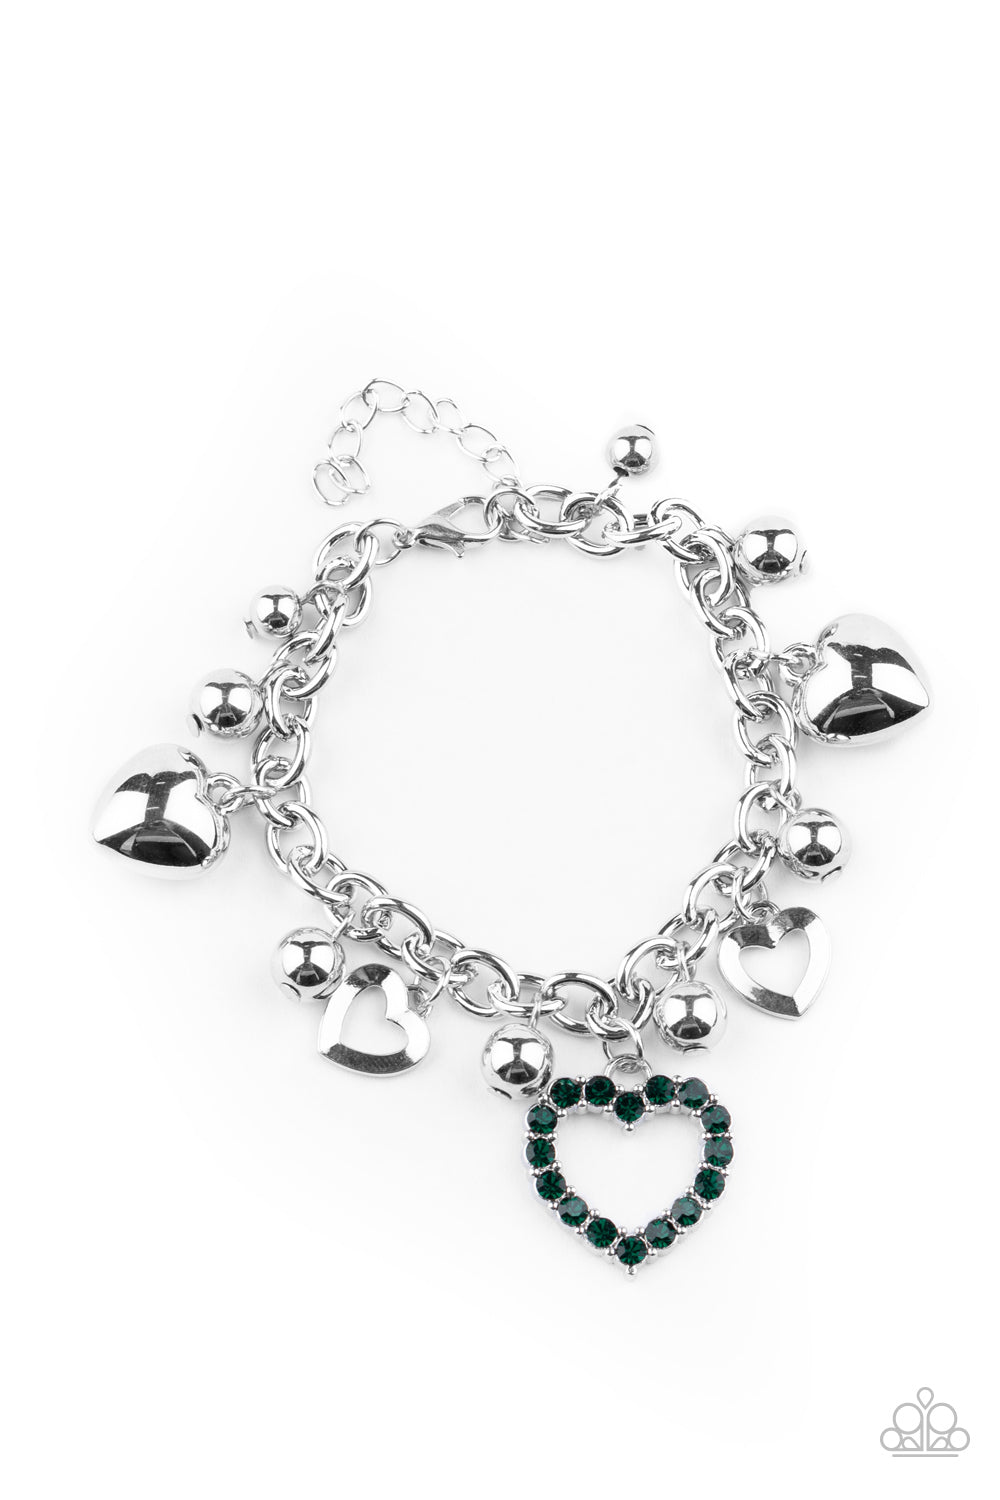 Beautifully Big-Hearted Green Bracelet freeshipping - JewLz4u Gemstone Gallery